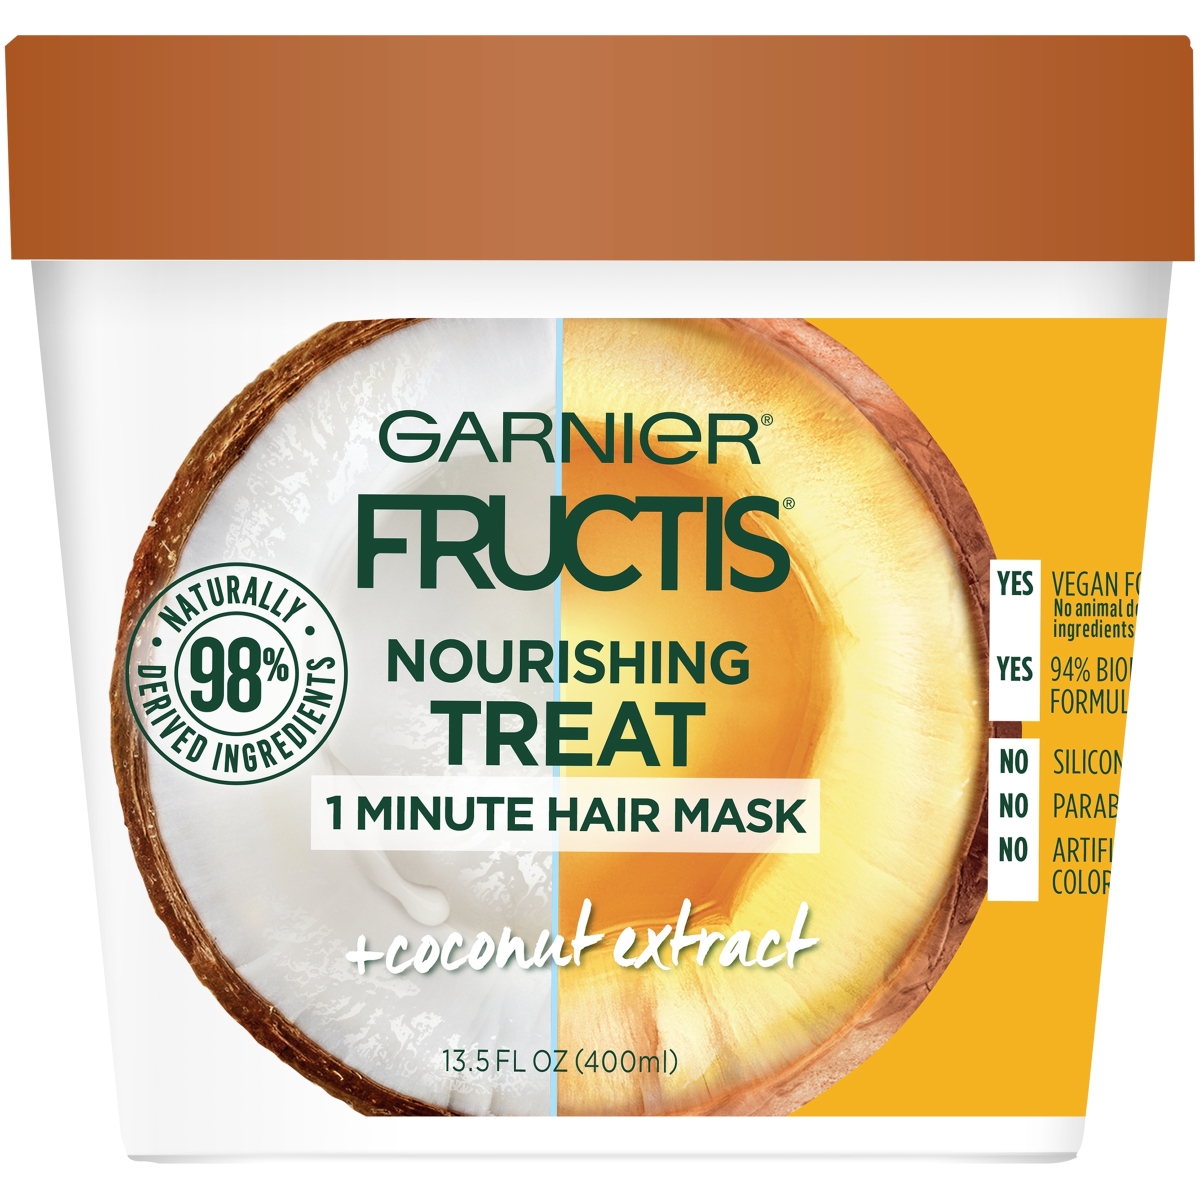 1091336 13.5 Oz Nourishing Treat 1 Minute Hair Mask, Coconut